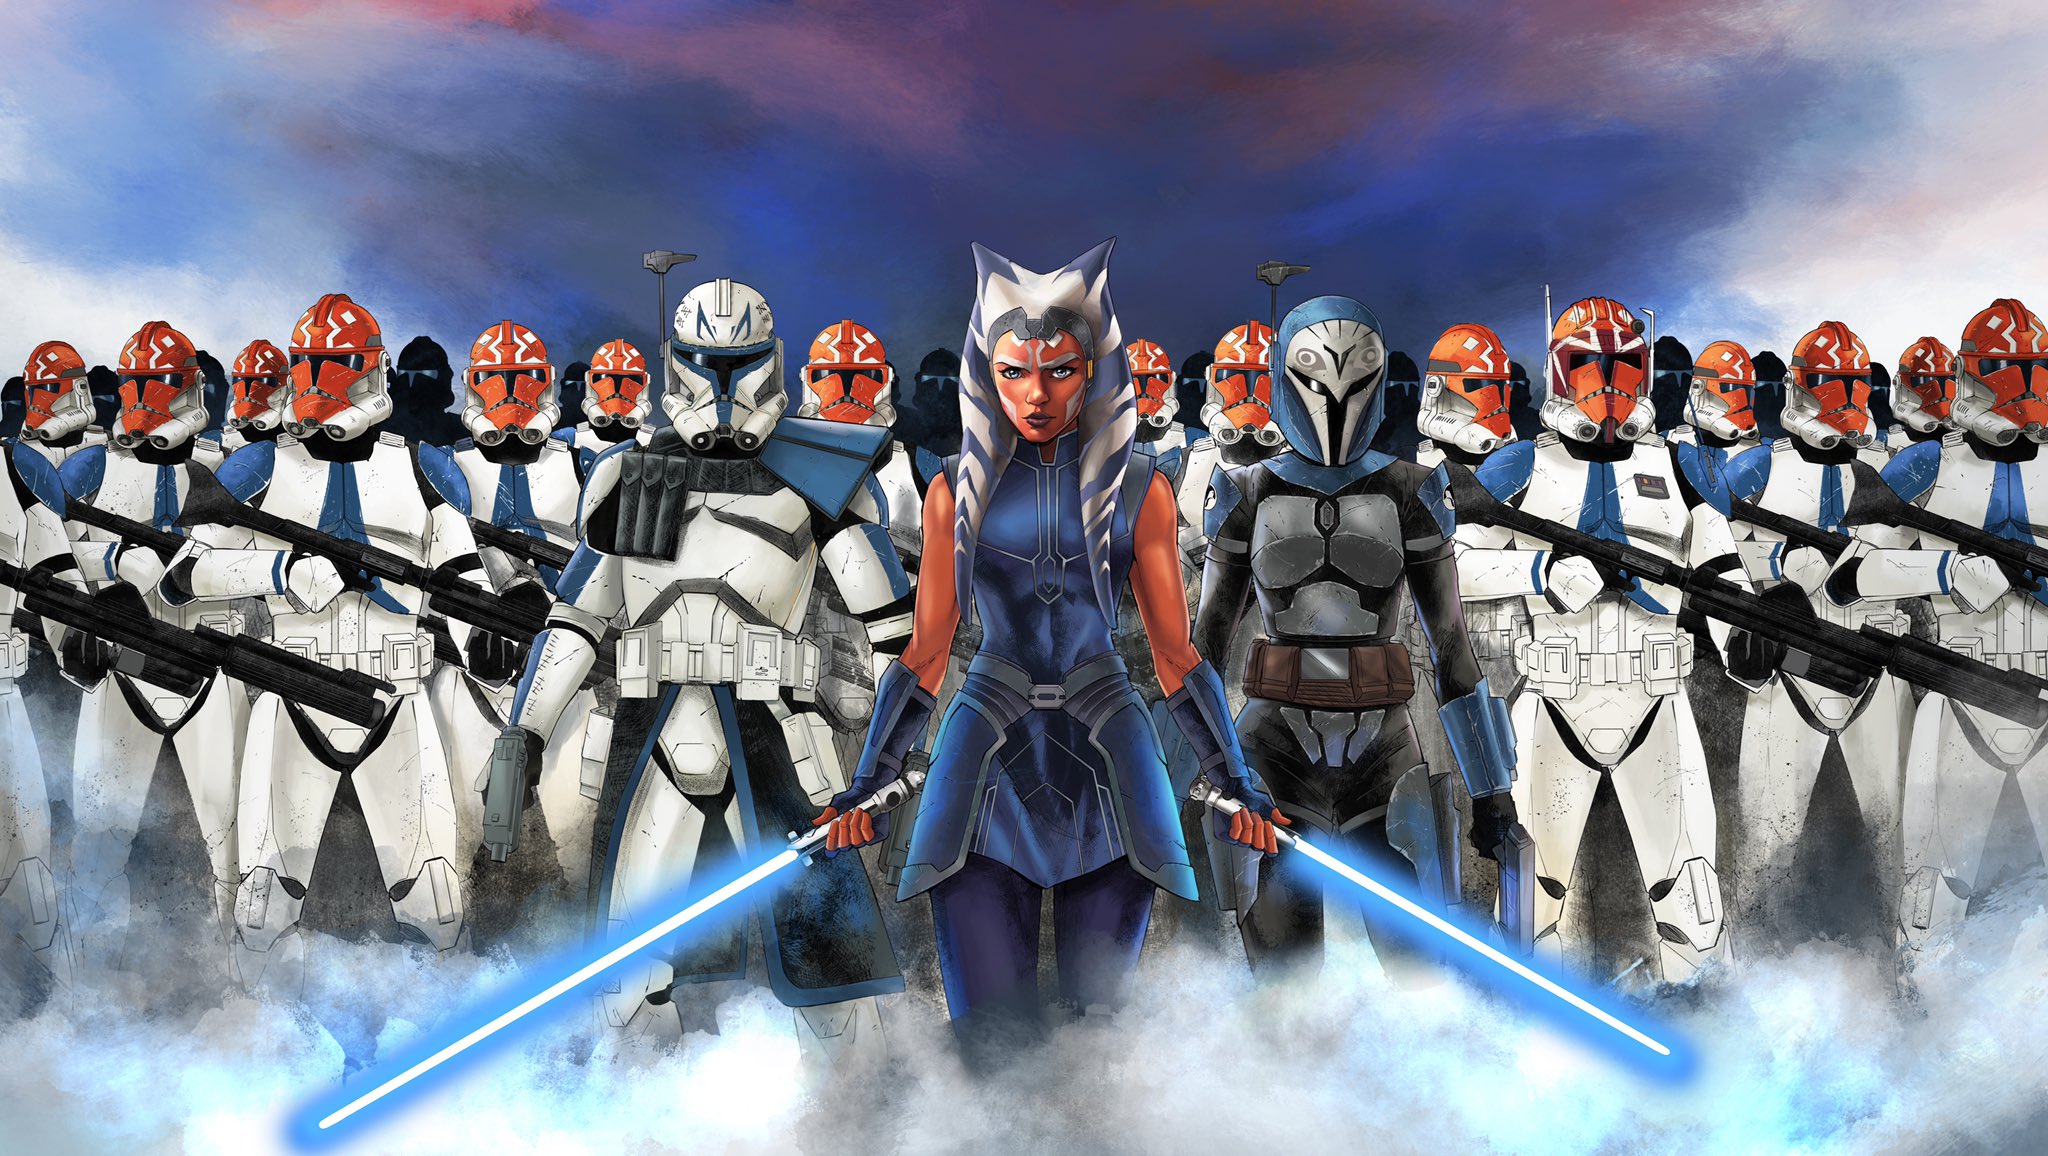 General 2048x1156 Star Wars lightsaber Captain Rex clone trooper The Clone Wars blaster